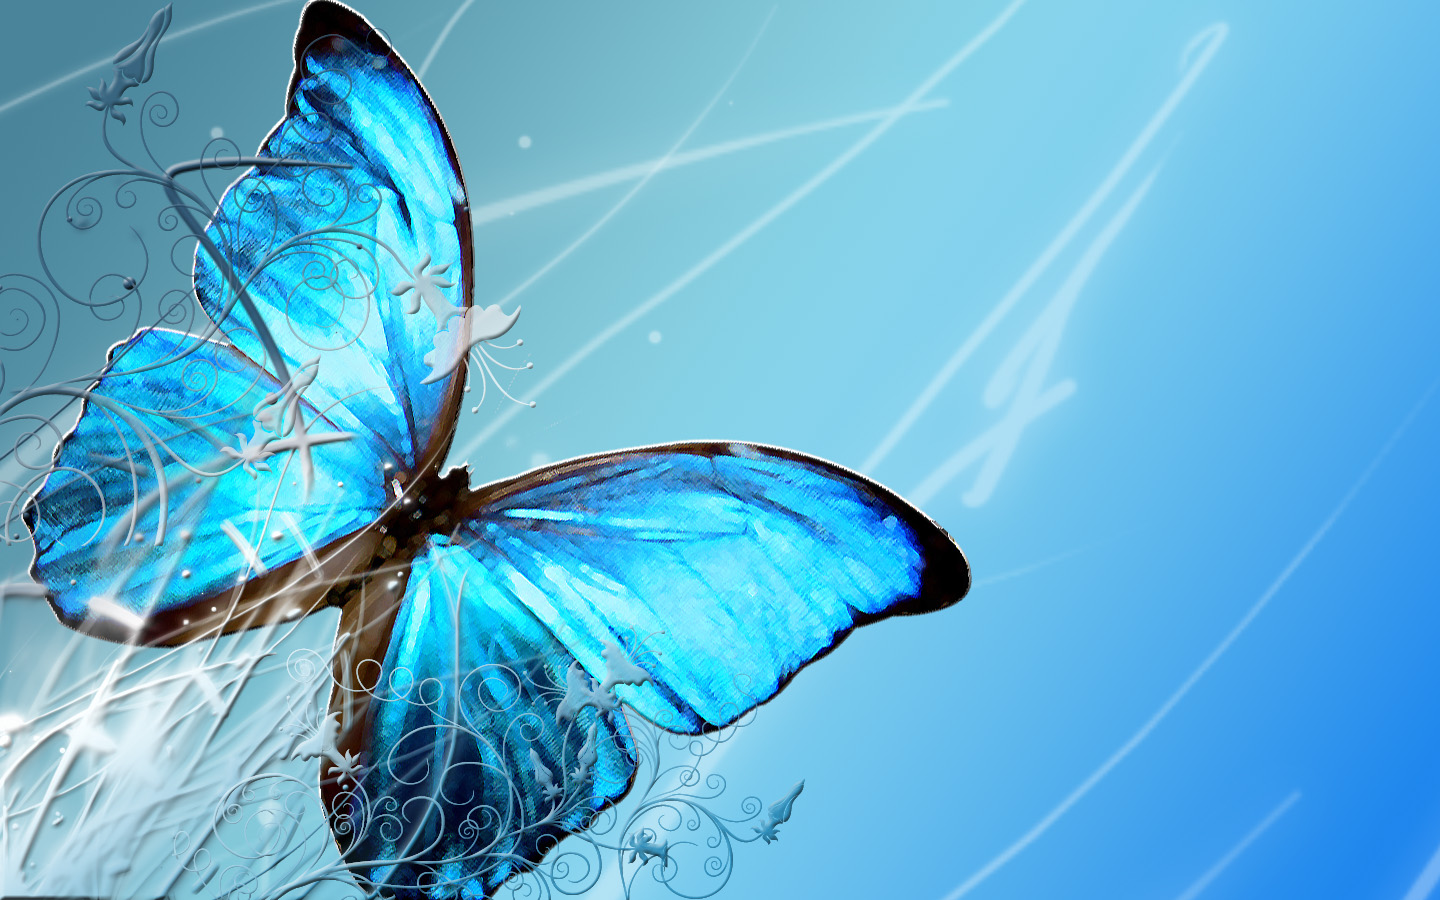 50+] Free Animated Butterflies Desktop Wallpaper - WallpaperSafari